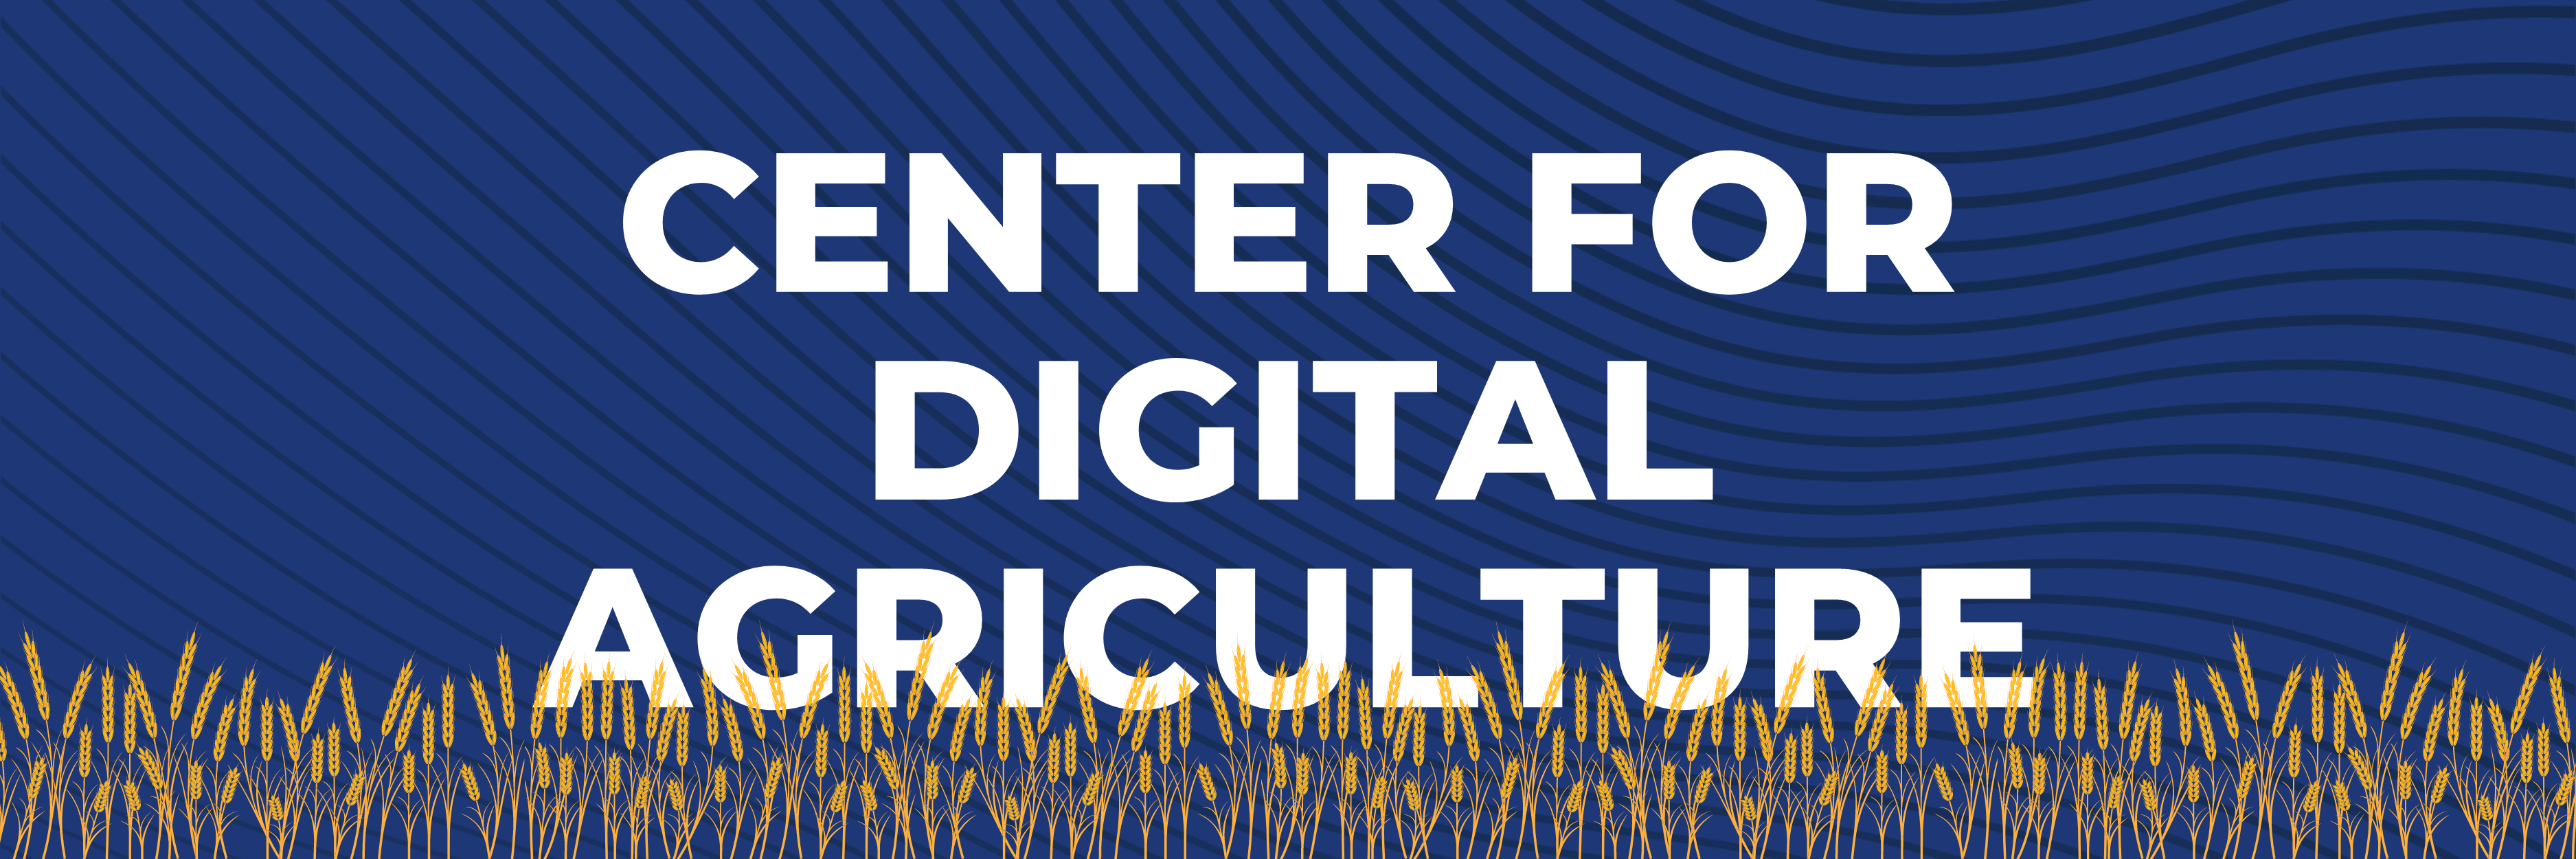 Center for Digital Agriculture